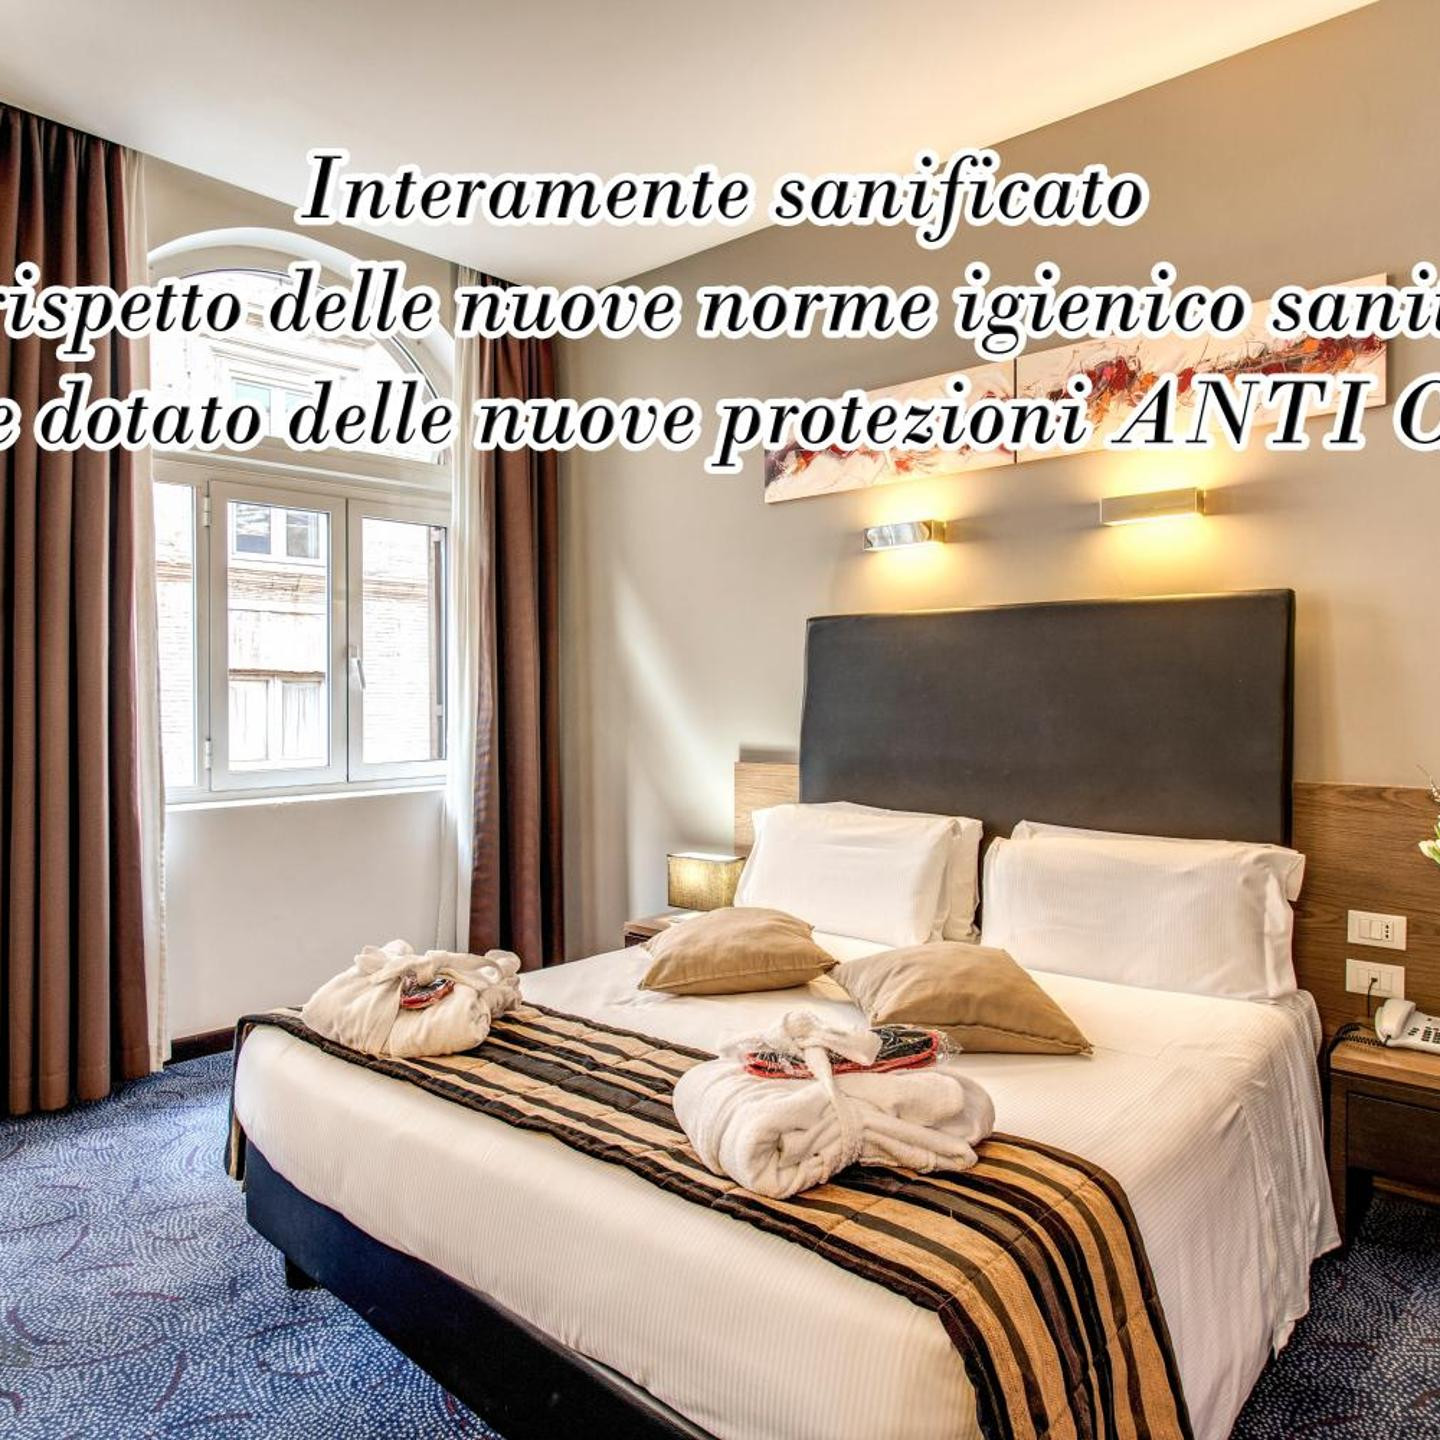 Hotel Rinascimento - Gruppo Trevi Hotels